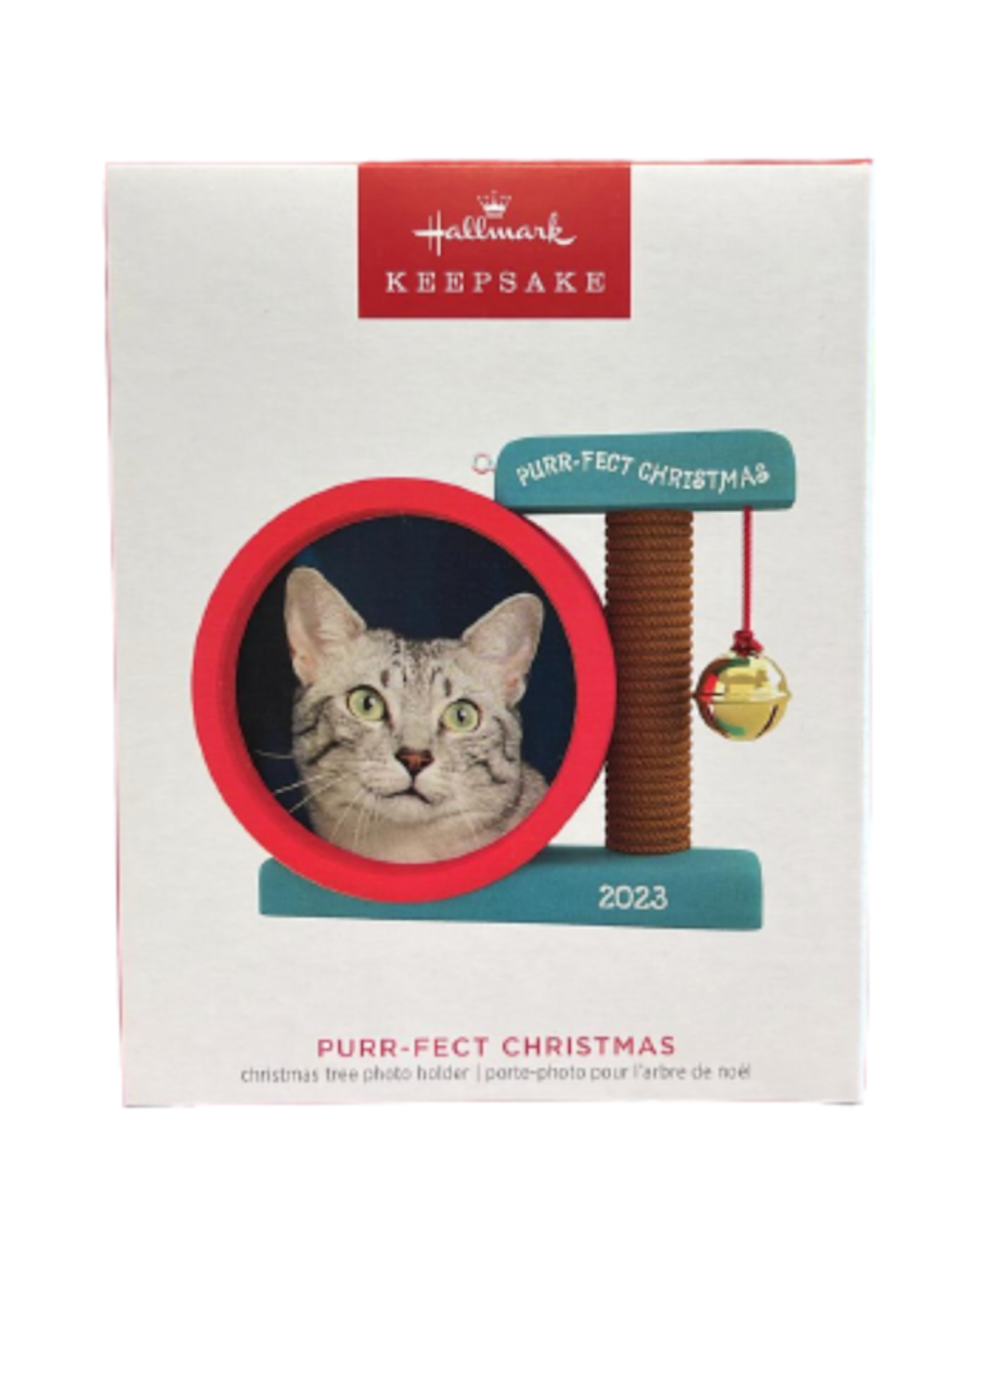 Hallmark 2023 Keepsake Purr-fect Christmas Photo Frame Ornament New with Box